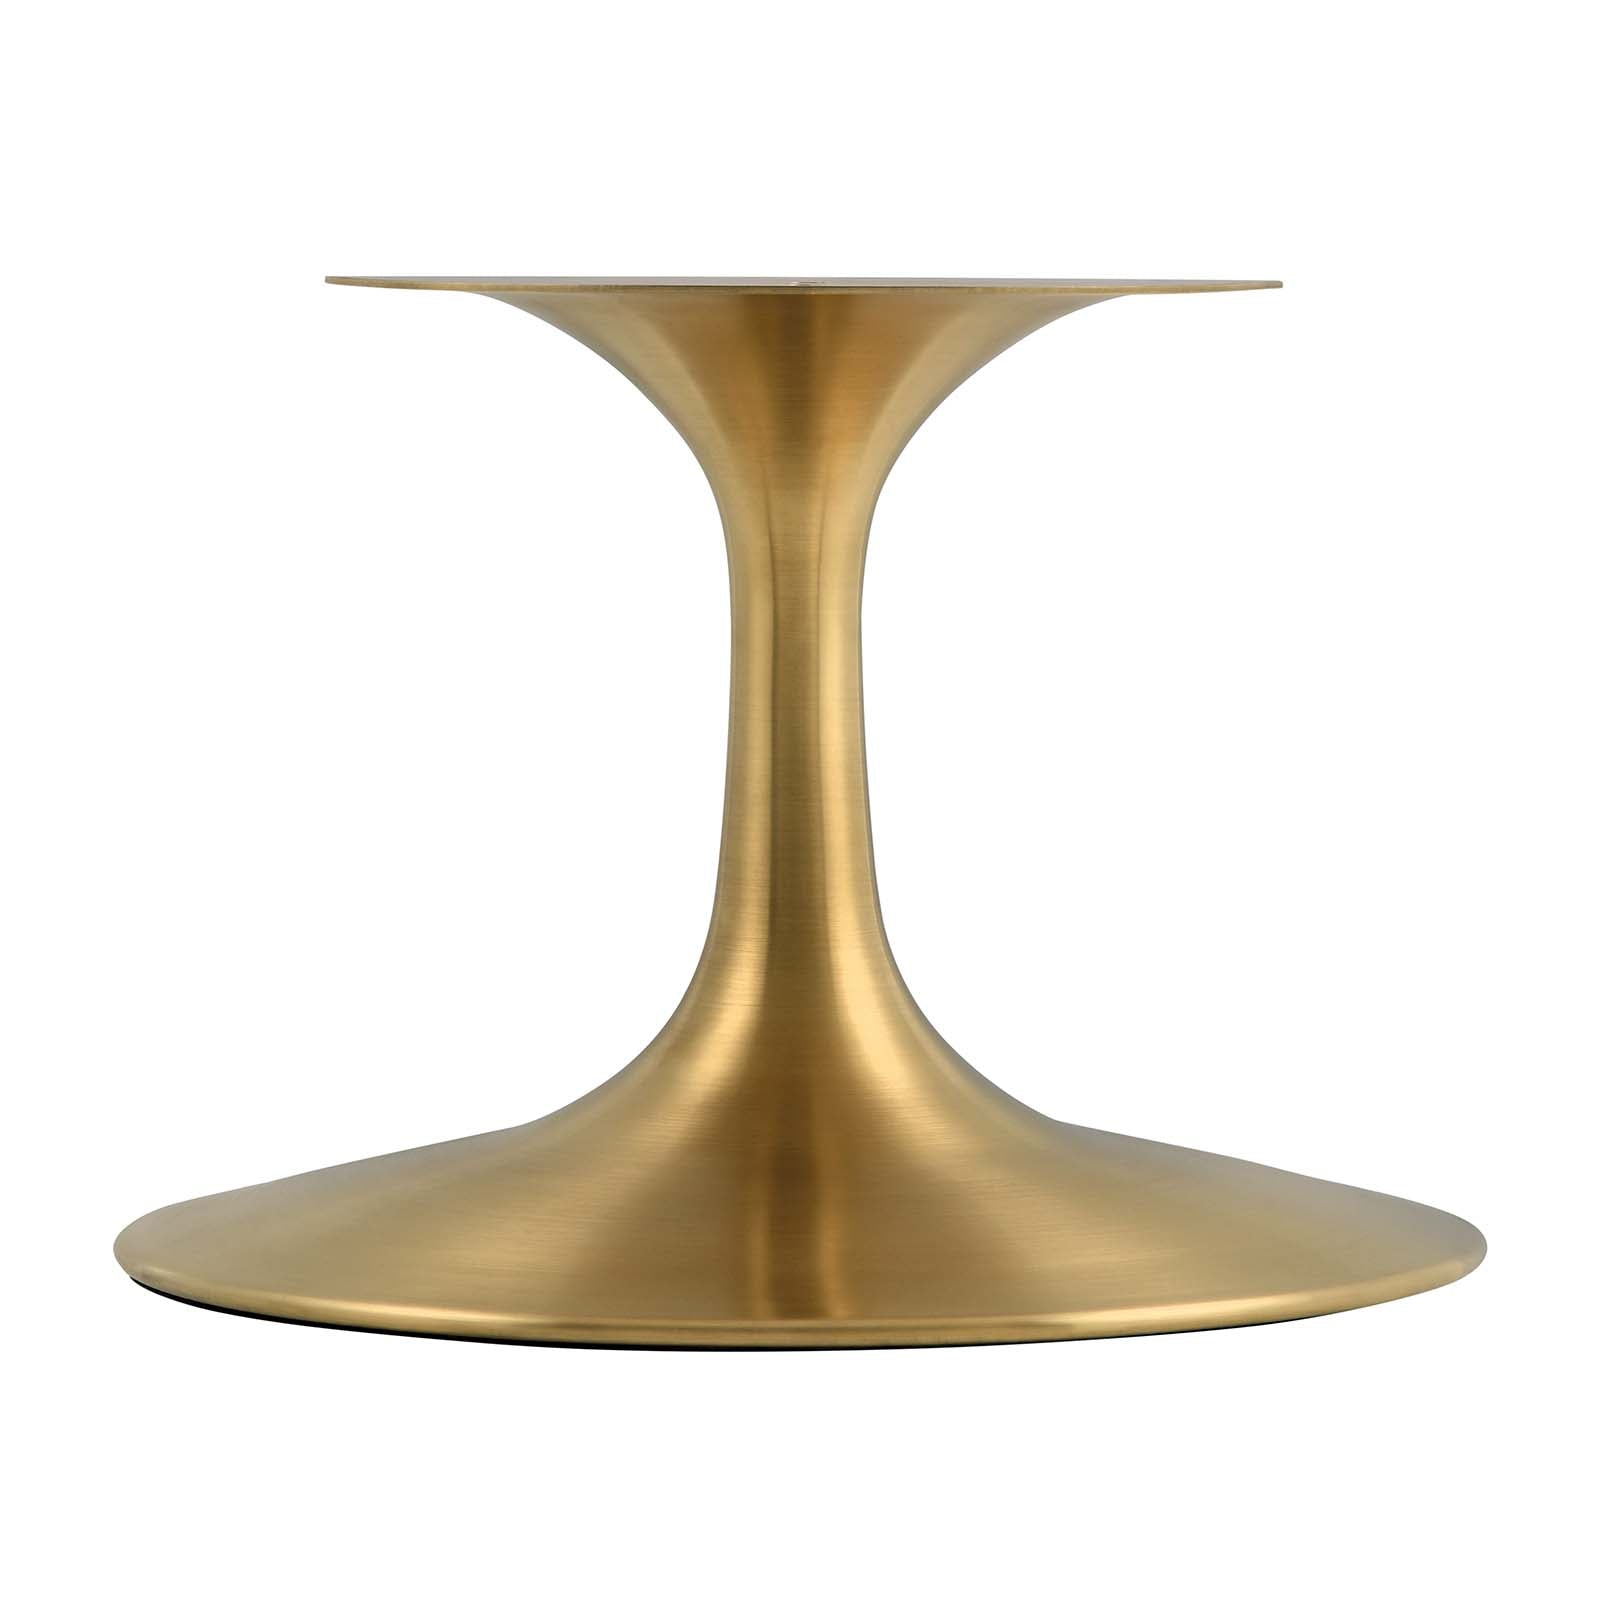 Lippa 42" Oval-Shaped Artifical Coffee Table-Coffee Table-Modway-Wall2Wall Furnishings